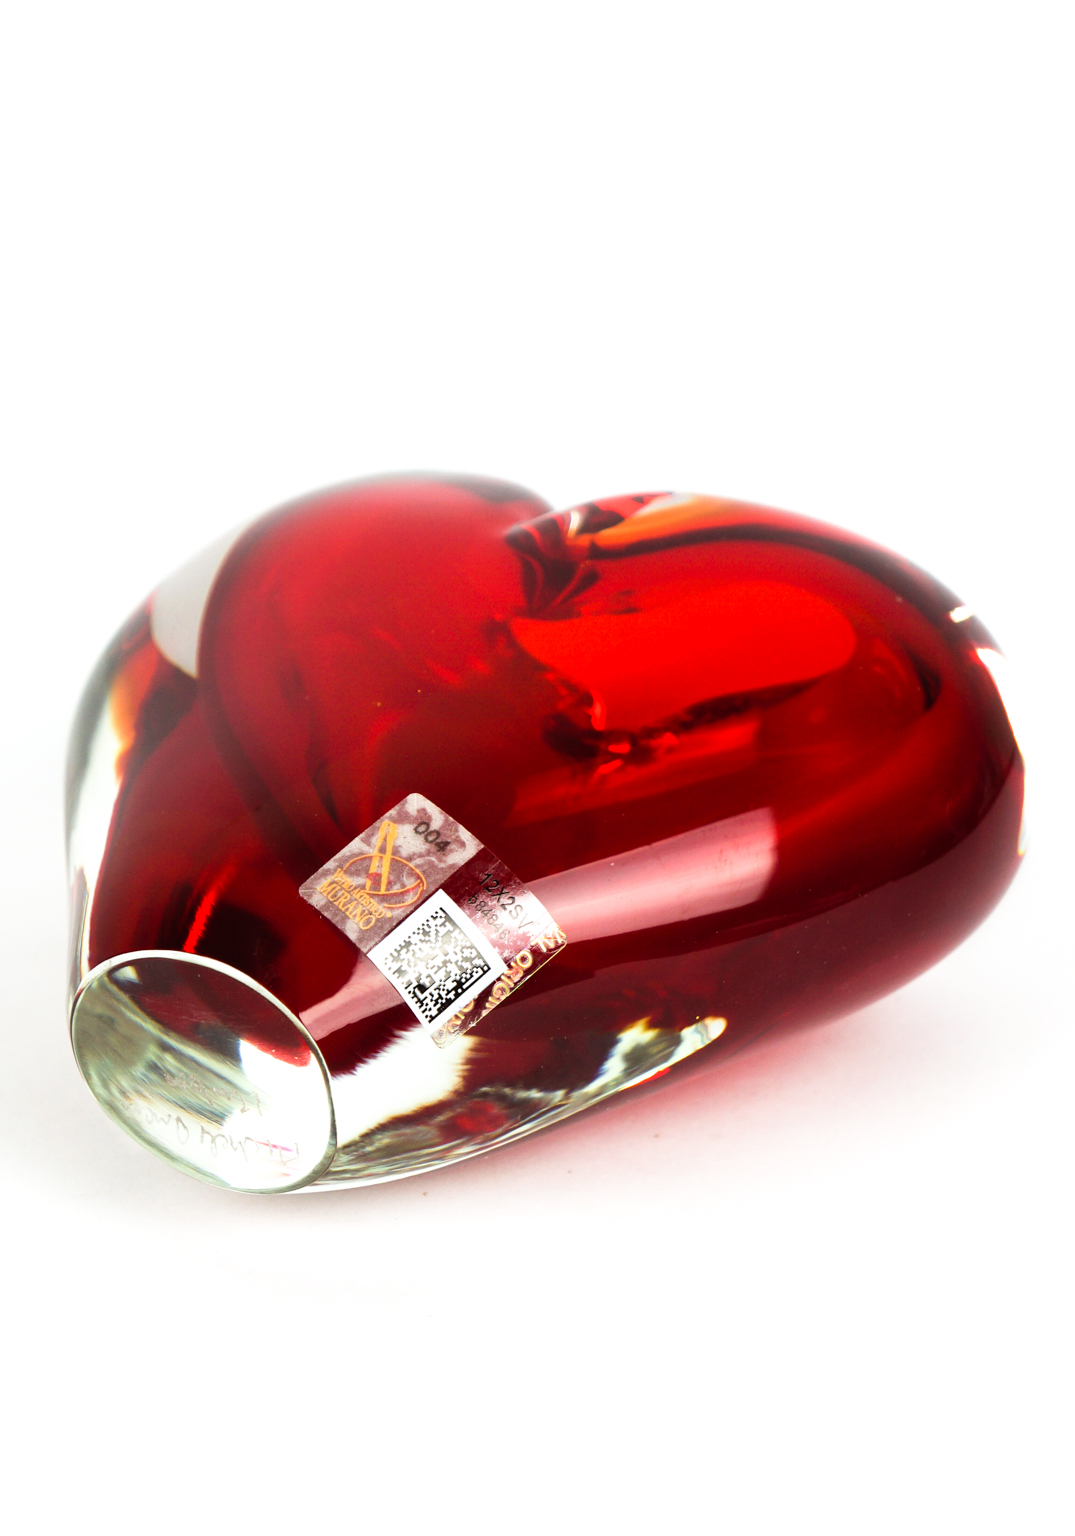 Heart Red Sculpture - Made Murano Glass